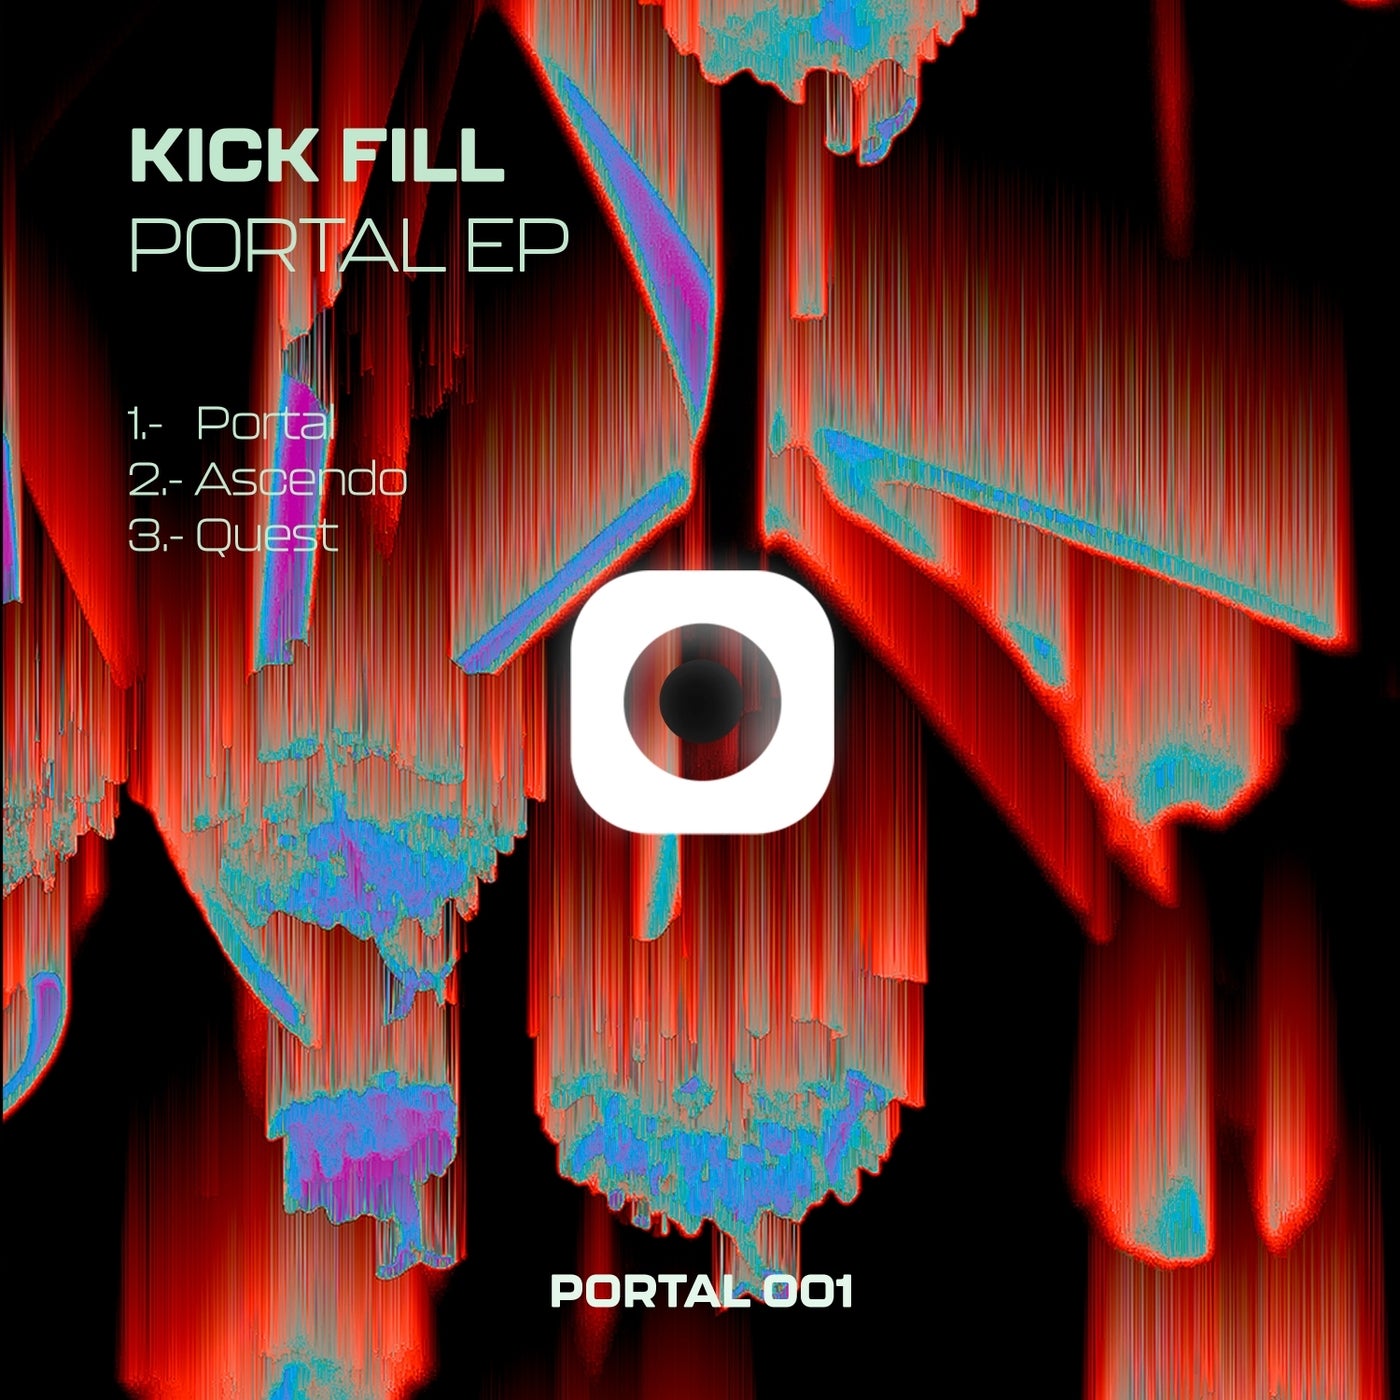 Portal EP